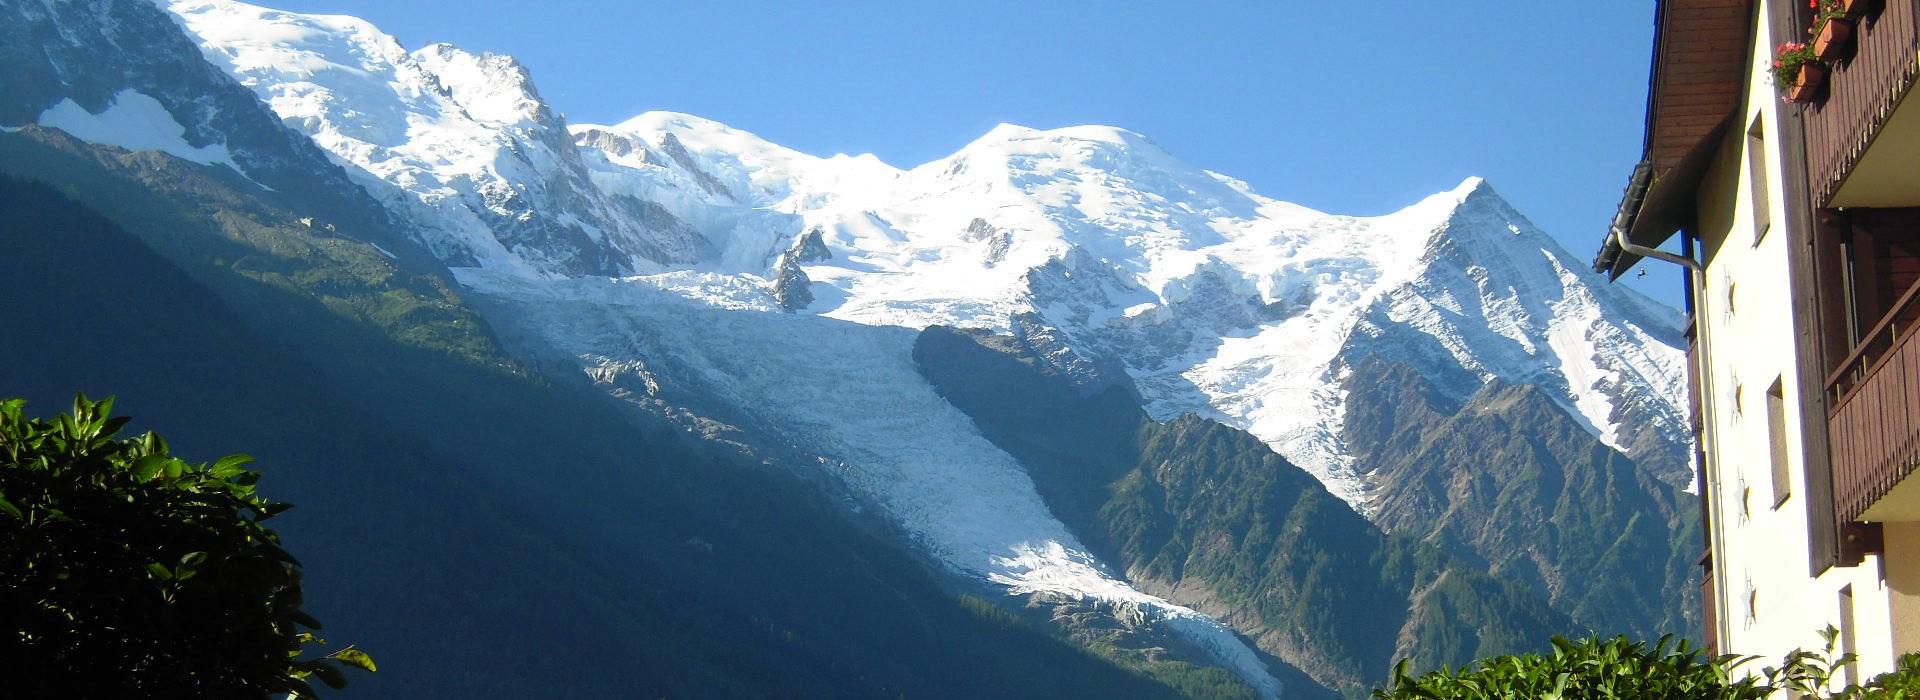 Visiter Chamonix - Rhône-Alpes